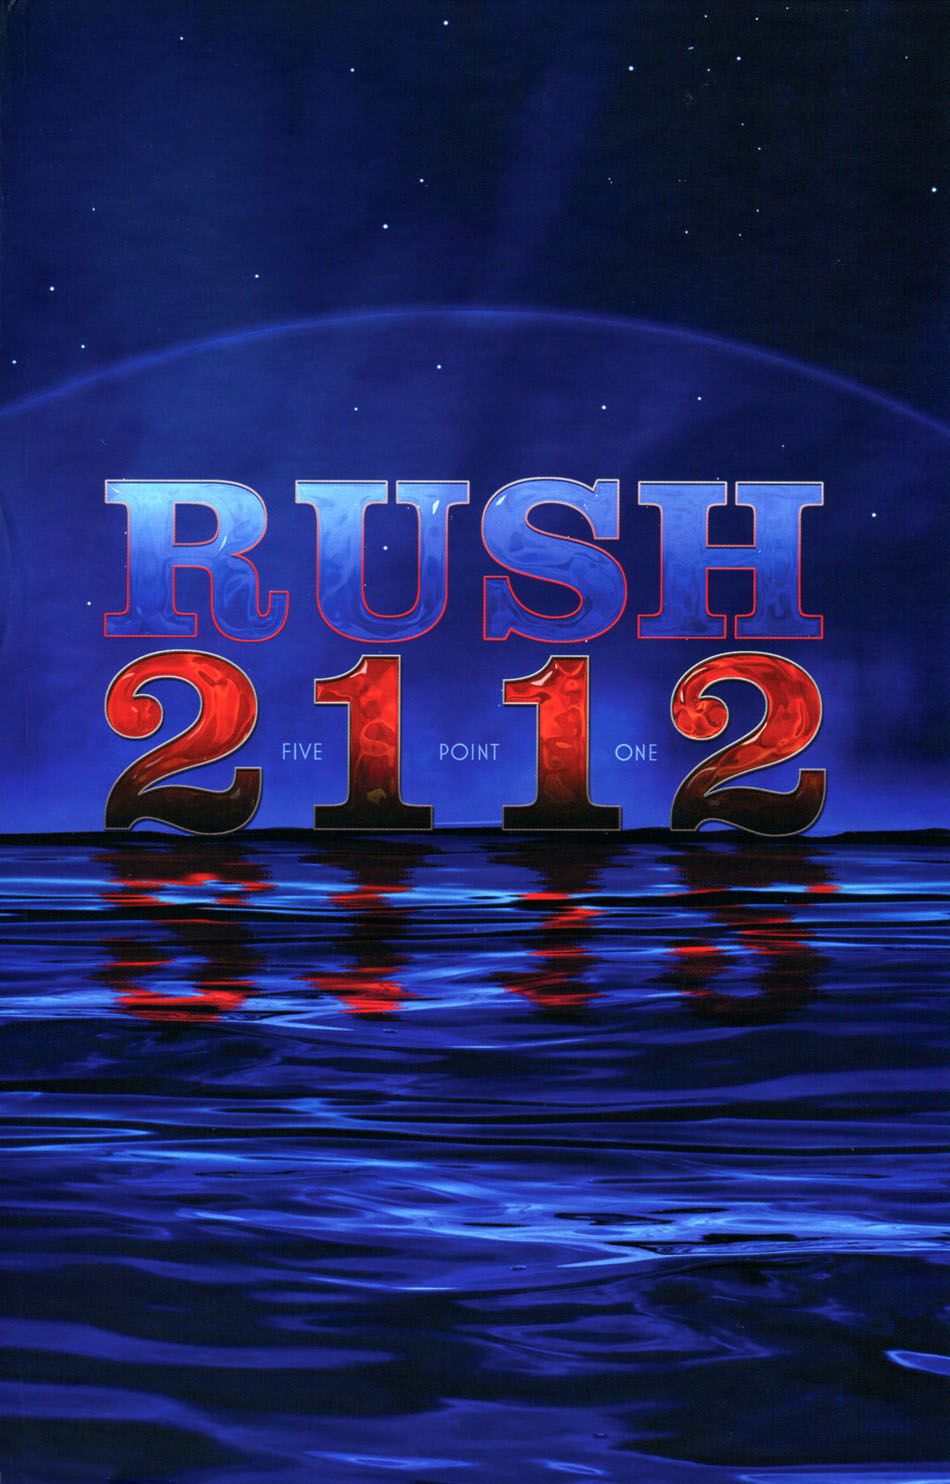 Rush 2112 Deluxe Edition in 5.1 Surround Sound